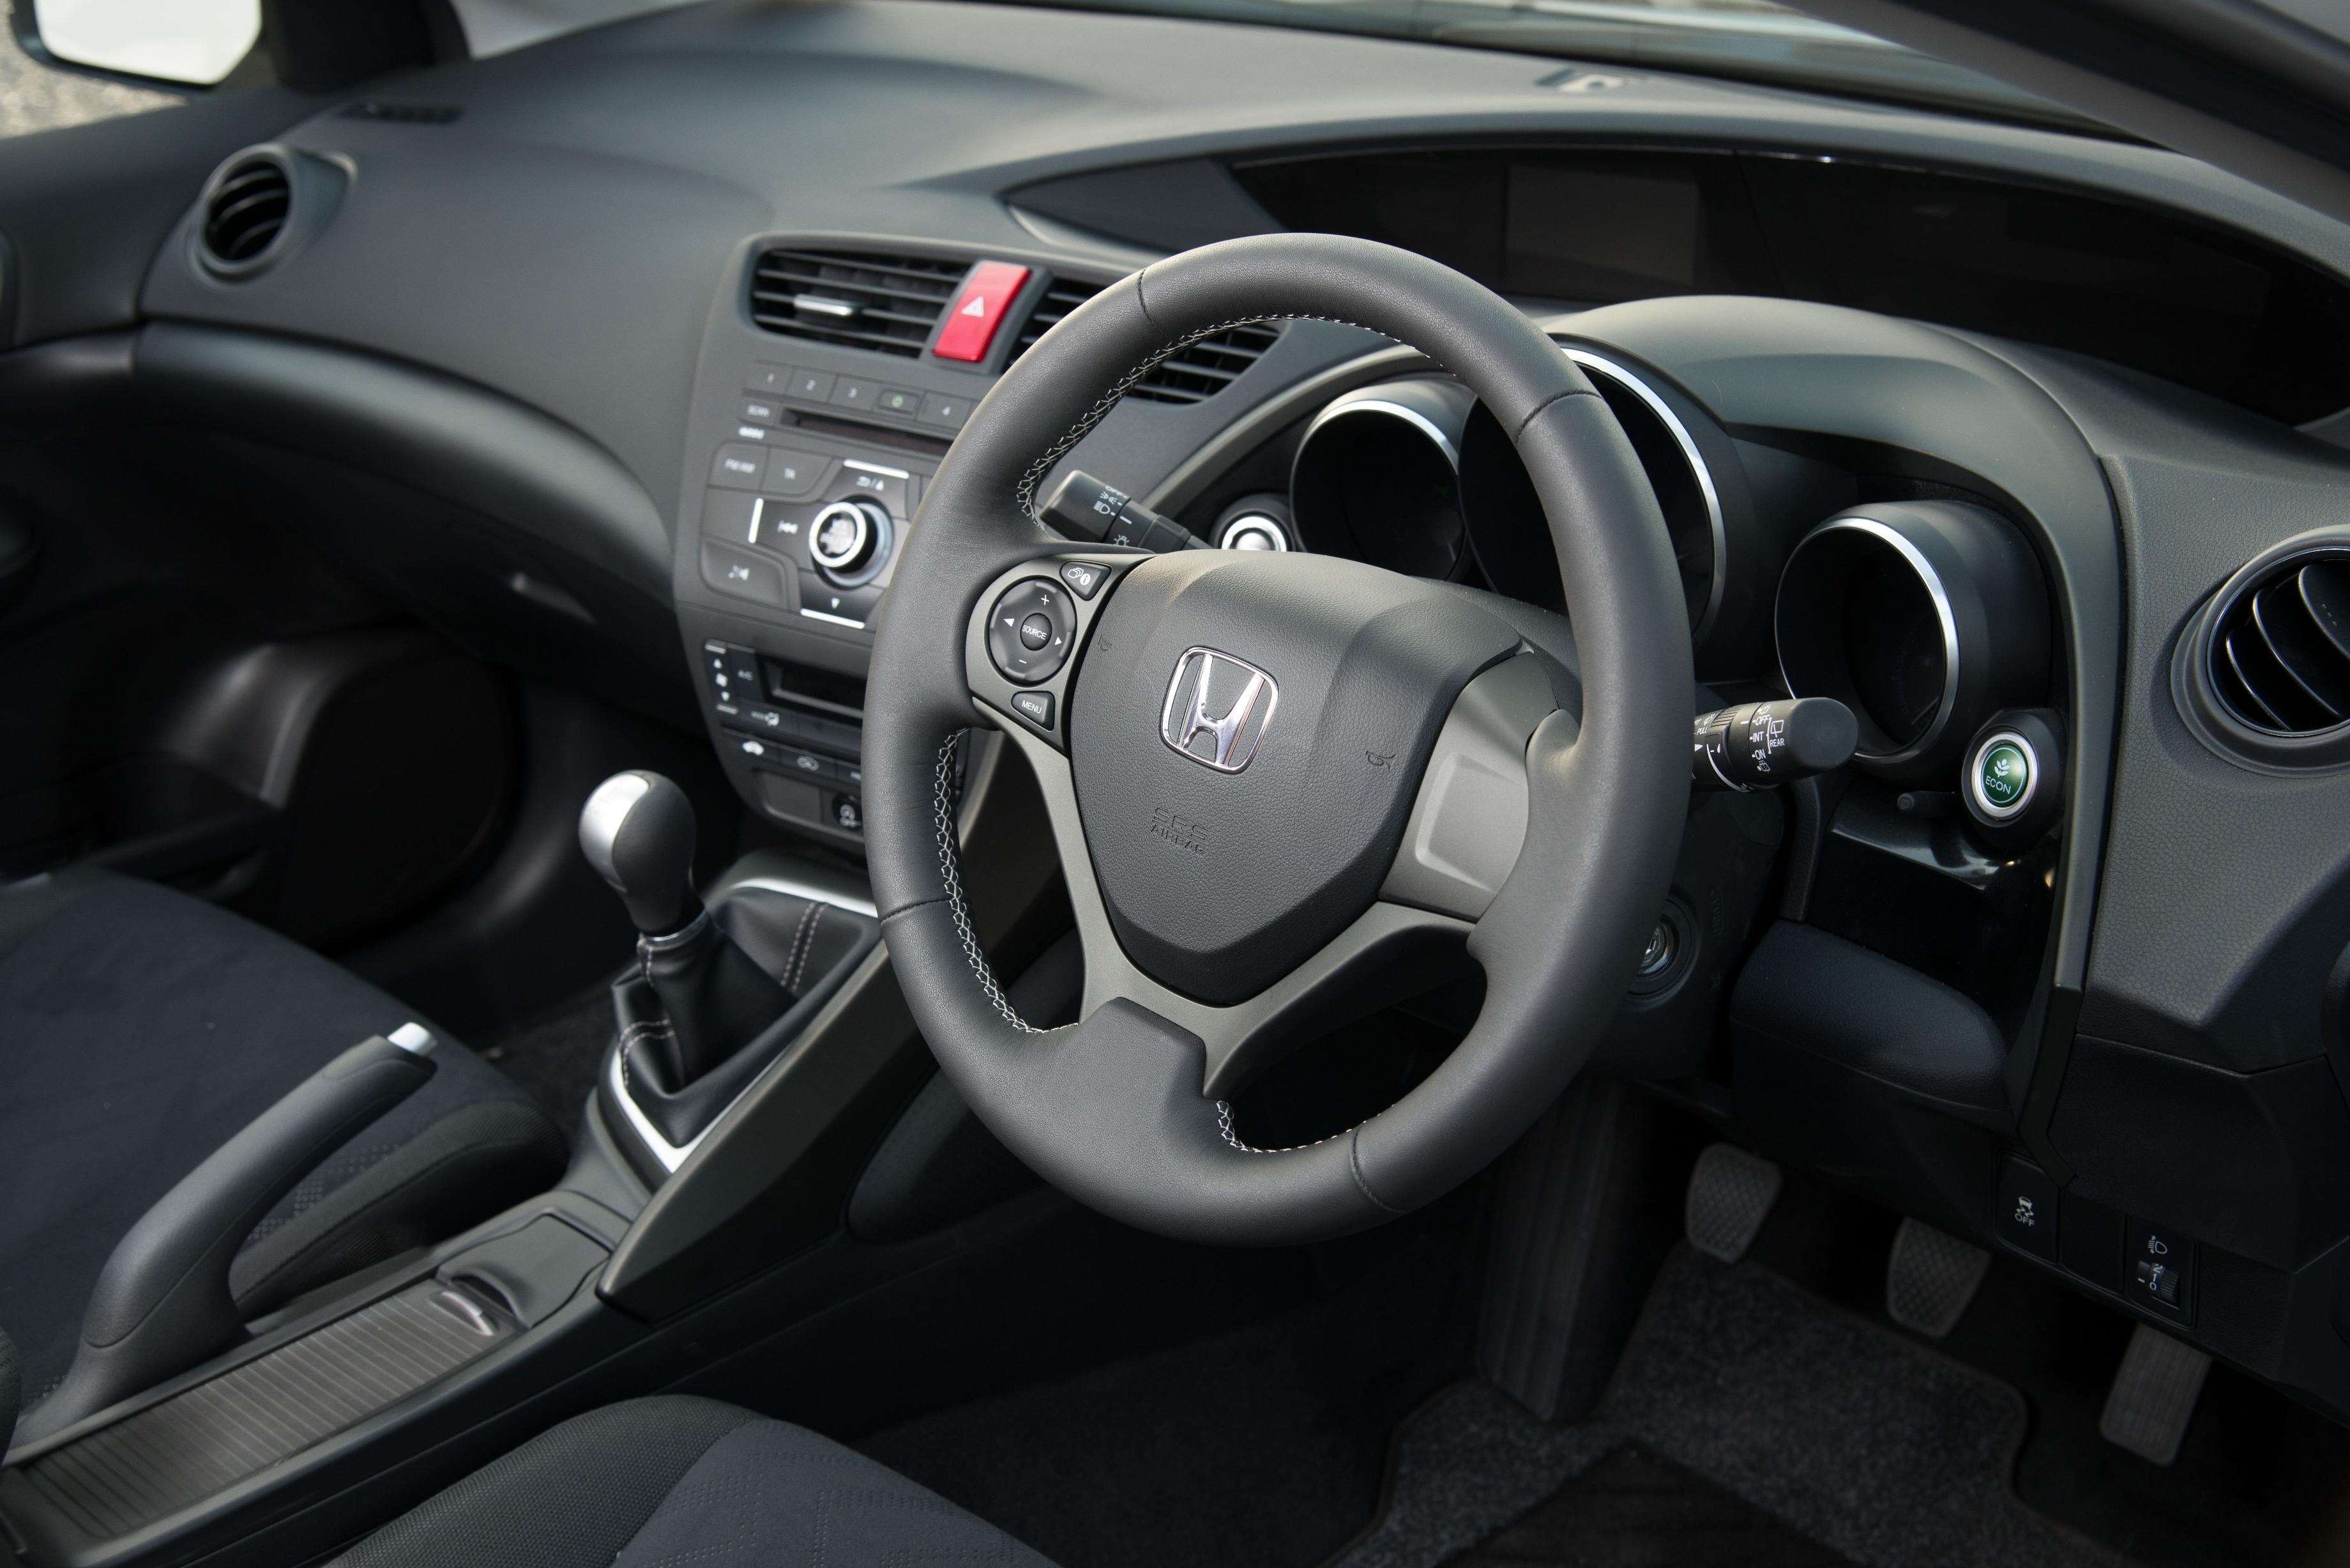 Honda Civic Ti Limited Edition